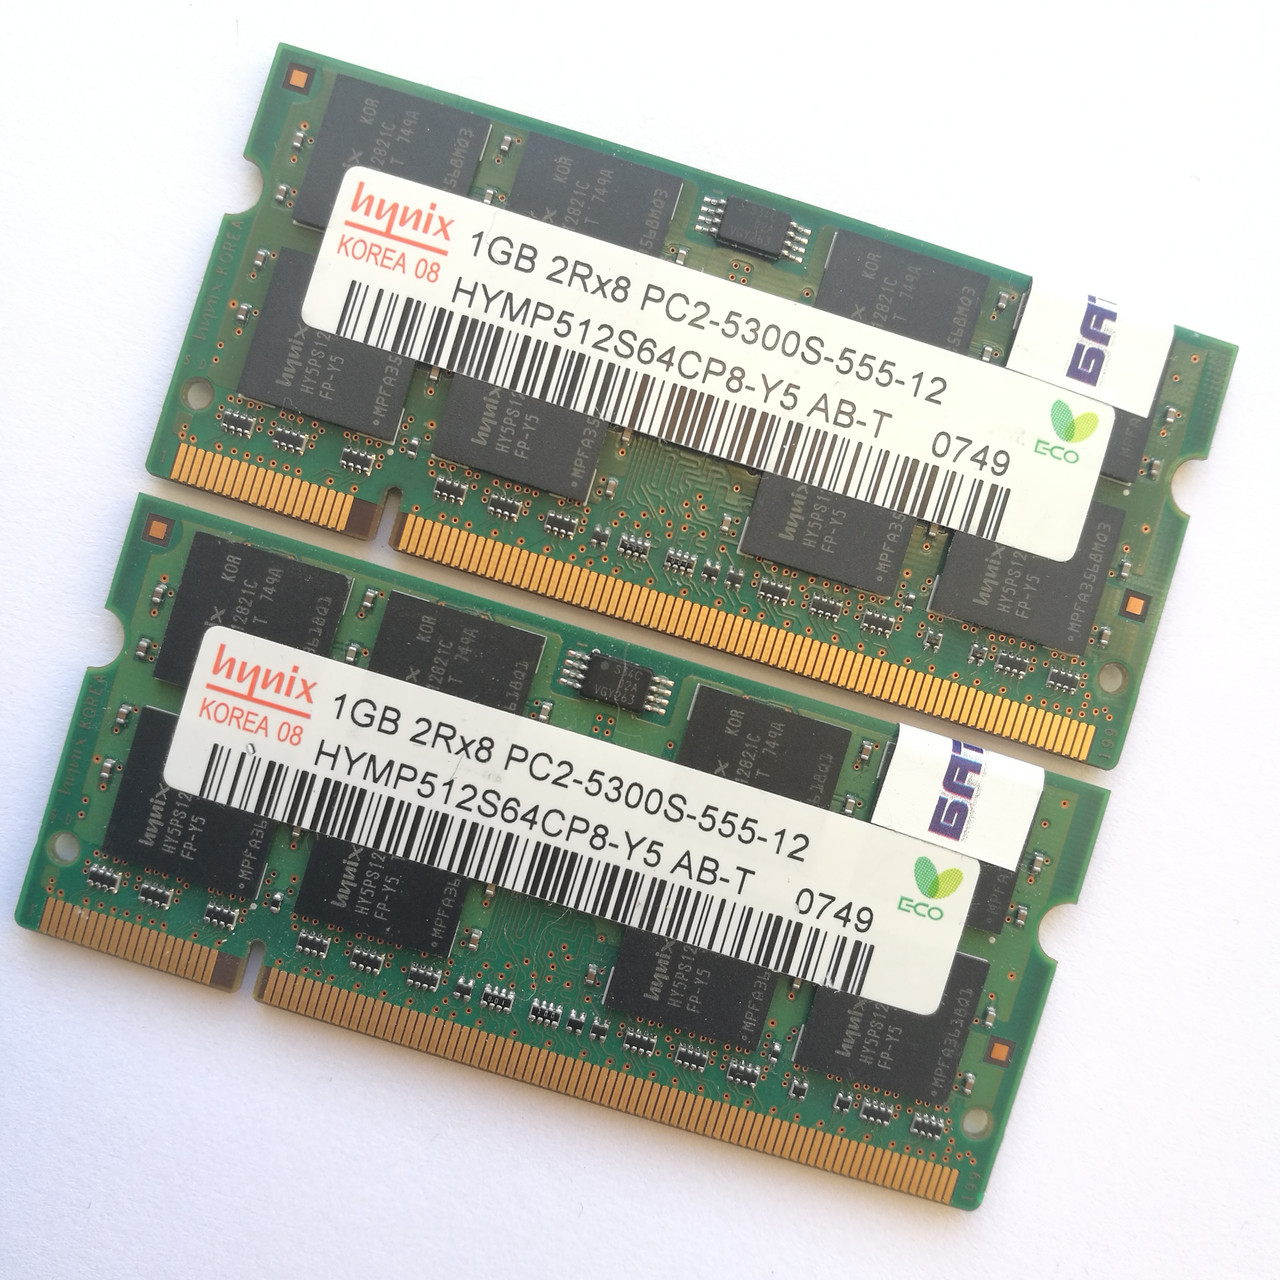 Оперативная память для ноутбука Hynix SODIMM DDR2 2Gb (1+1) 667MHz 5300s CL5 (HYMP512S64CP8-Y5 AB-T) Б/У